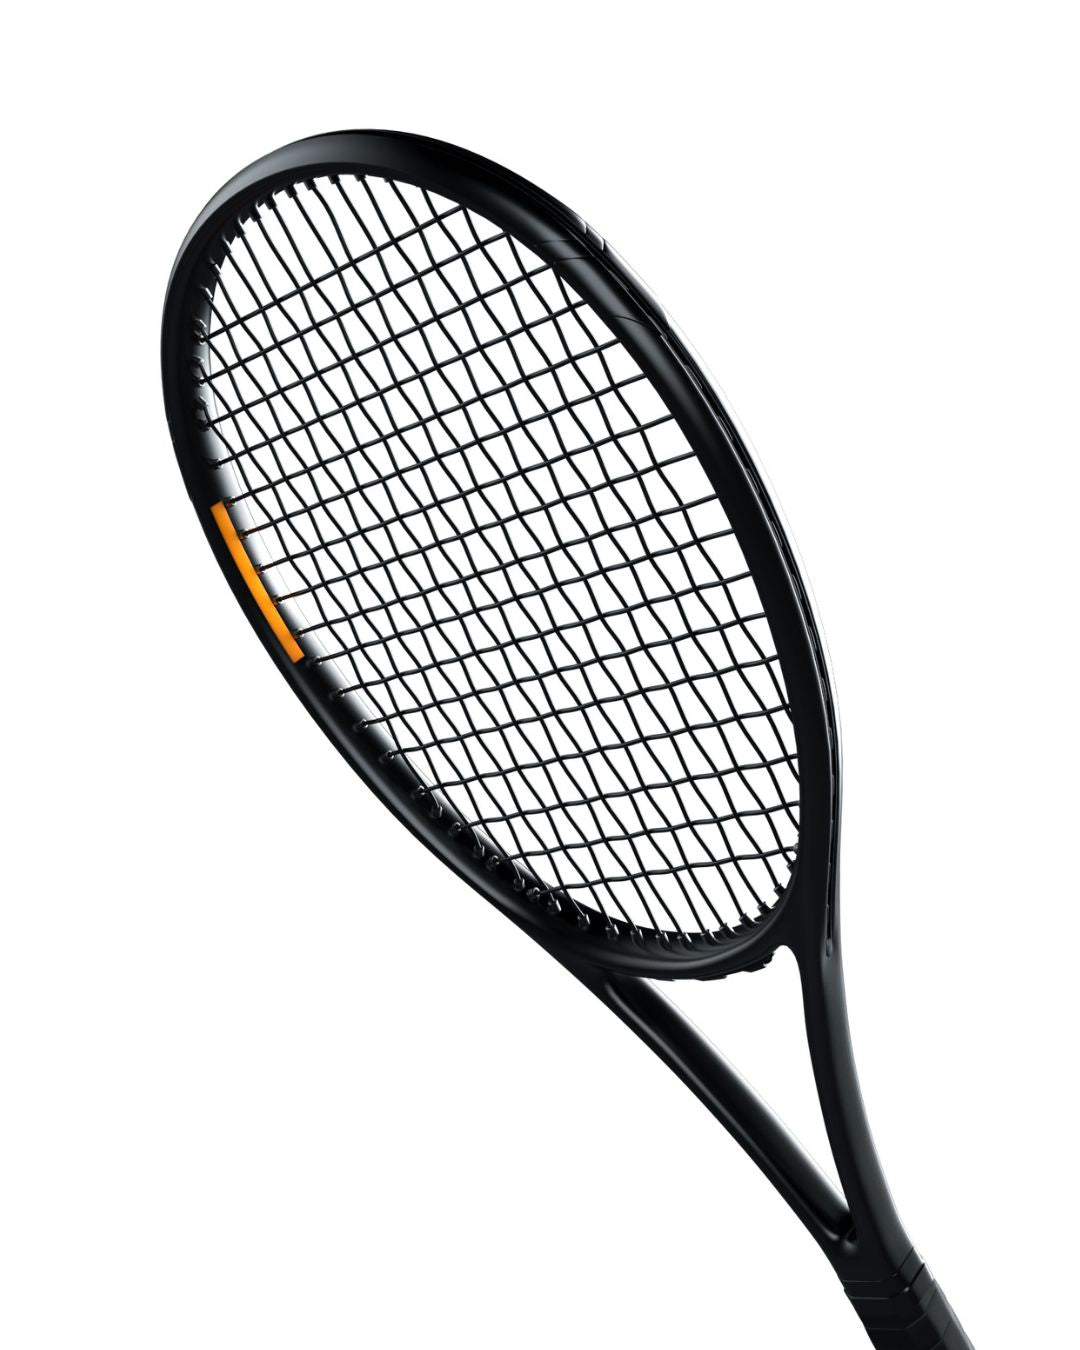 VT Advantec Anti-Vibe Strips – Tennis Racket Vibration Dampener